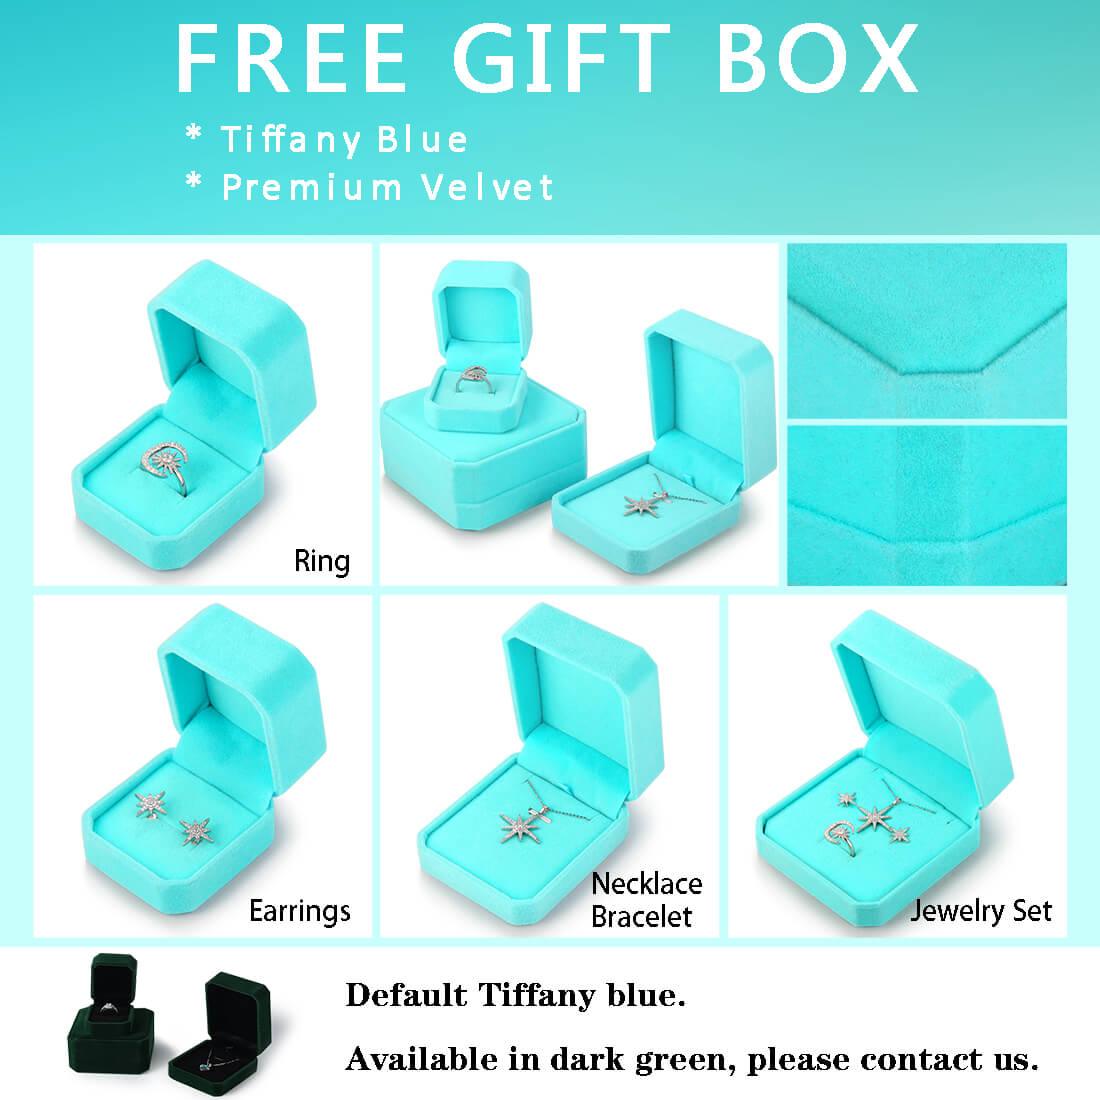 3D Cube Birthstone February Amethyst Jewelry Set 3PCS - Jewelry Set - Aurora Tears